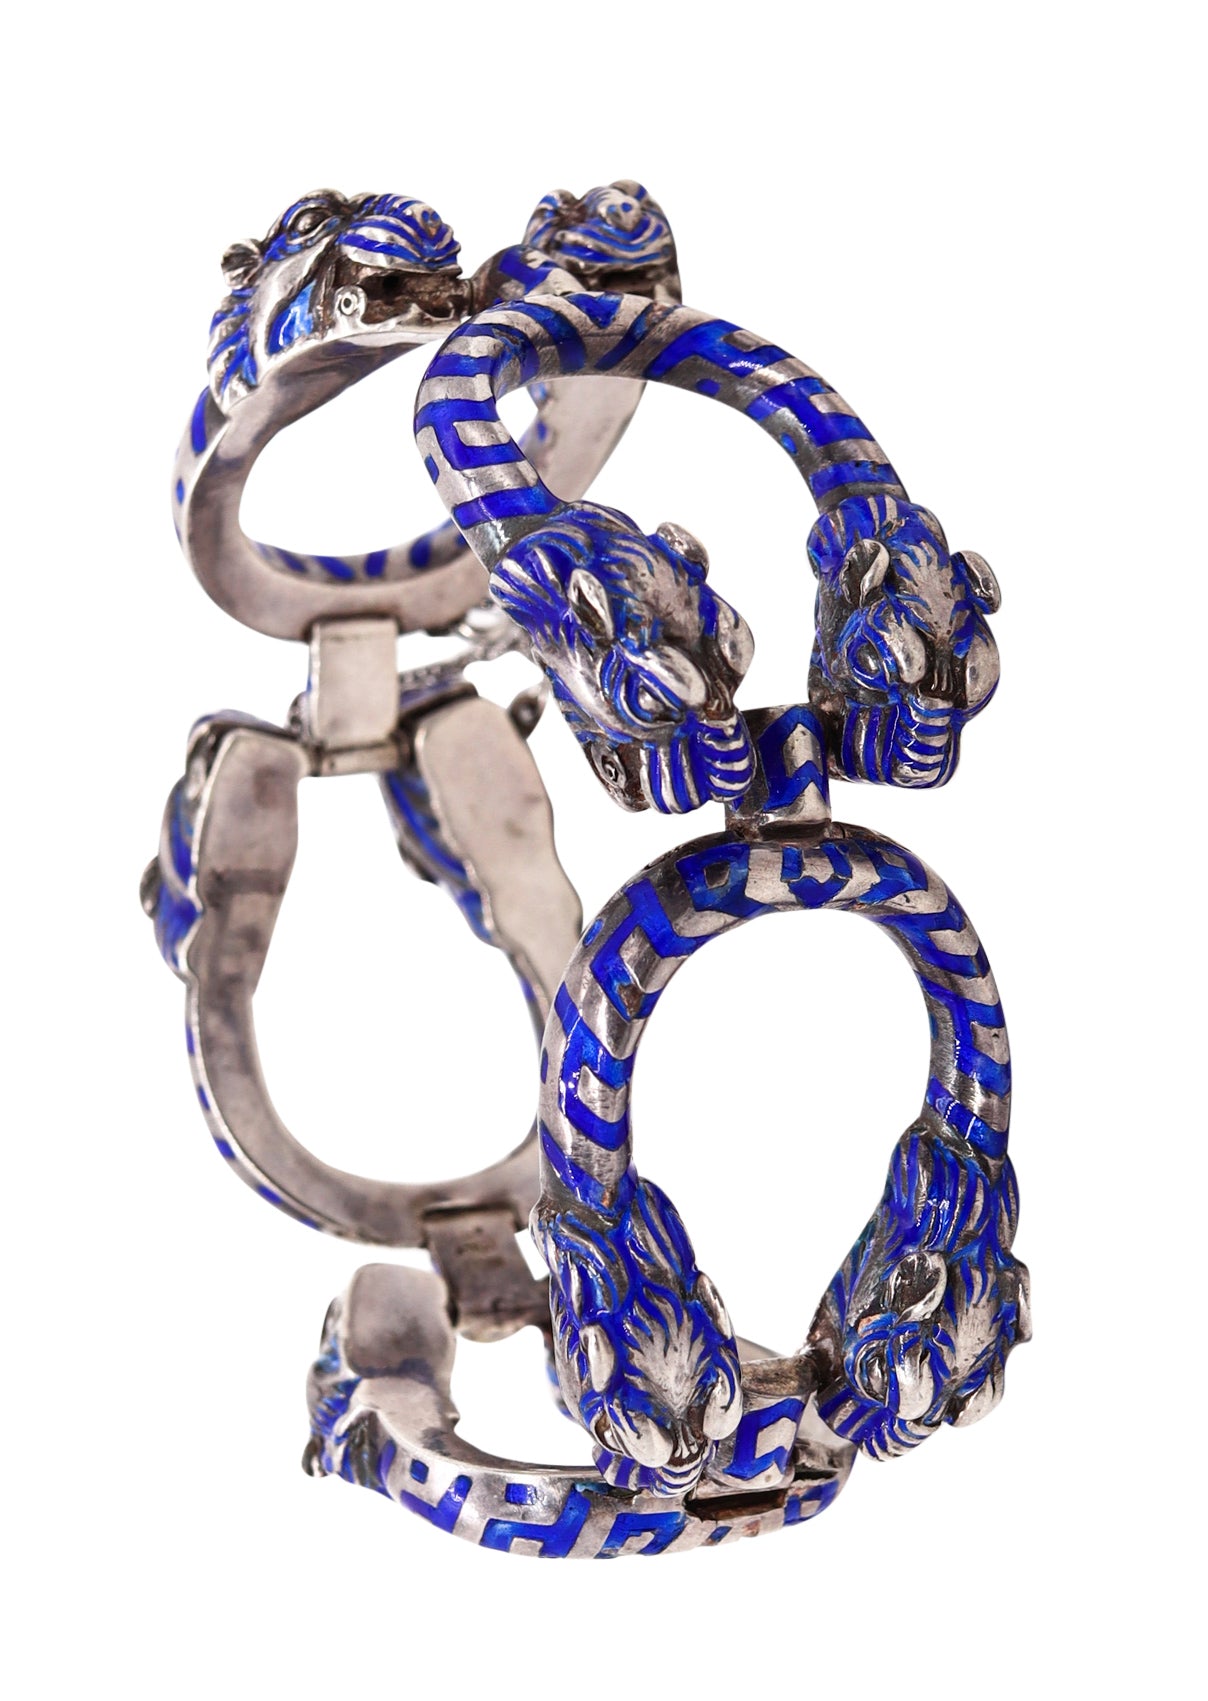  S925 Silver Necklace for Women, Vintage Enamel Color